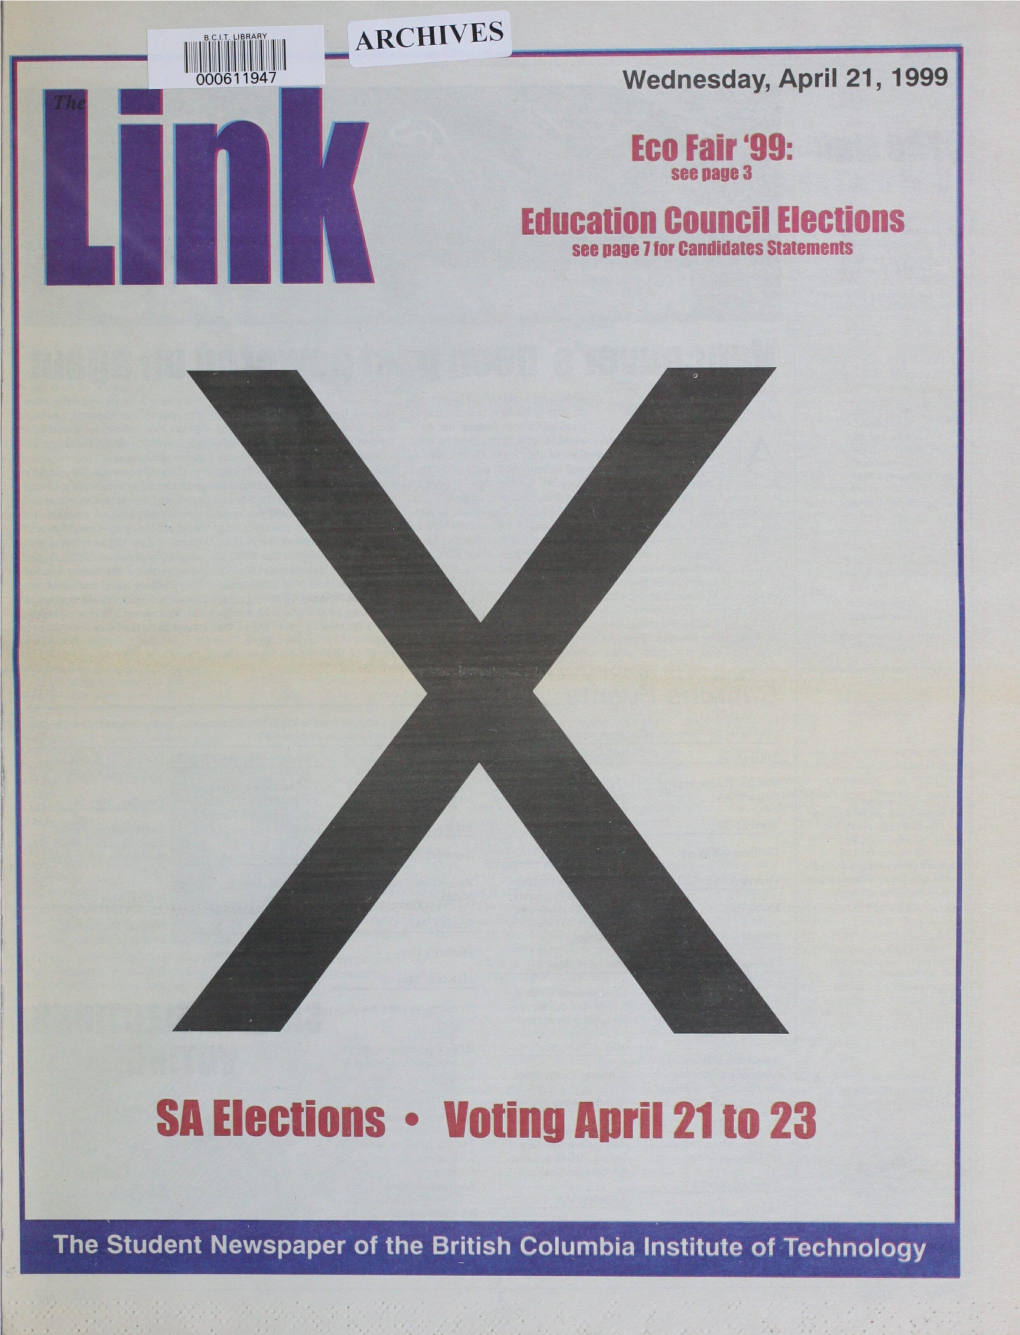 SA Elections • Voting Aprii 21 to 23